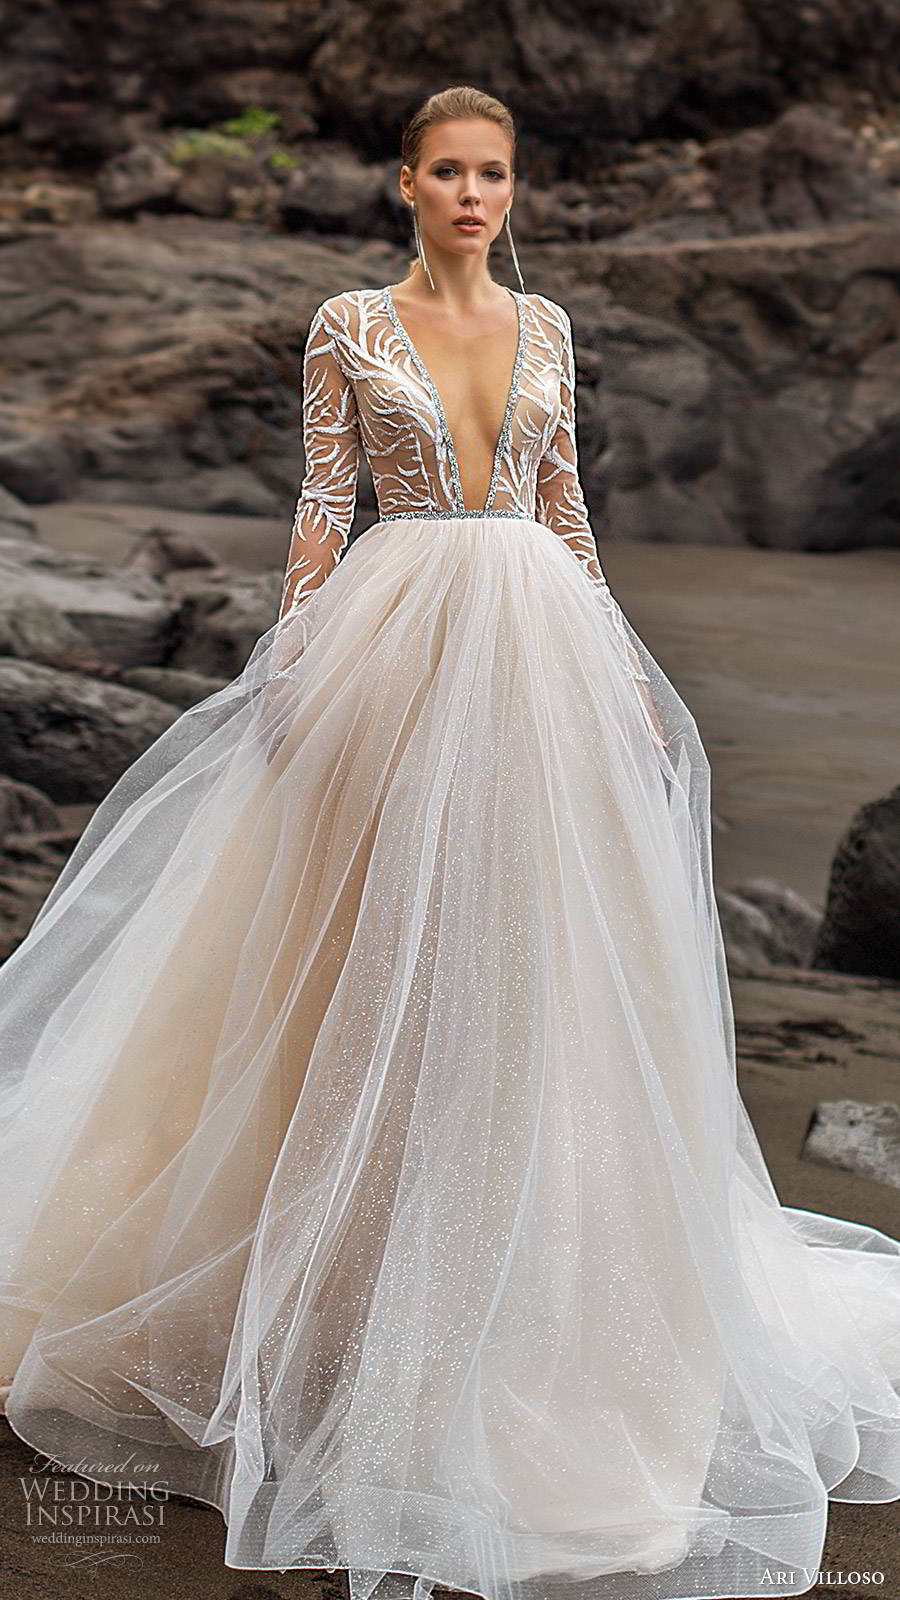 ari villoso 2020 bridal illusion long sleeves deep v neckline sheer embellished bodice a line ball gown wedding dress (13) romantic modern chapel train mv